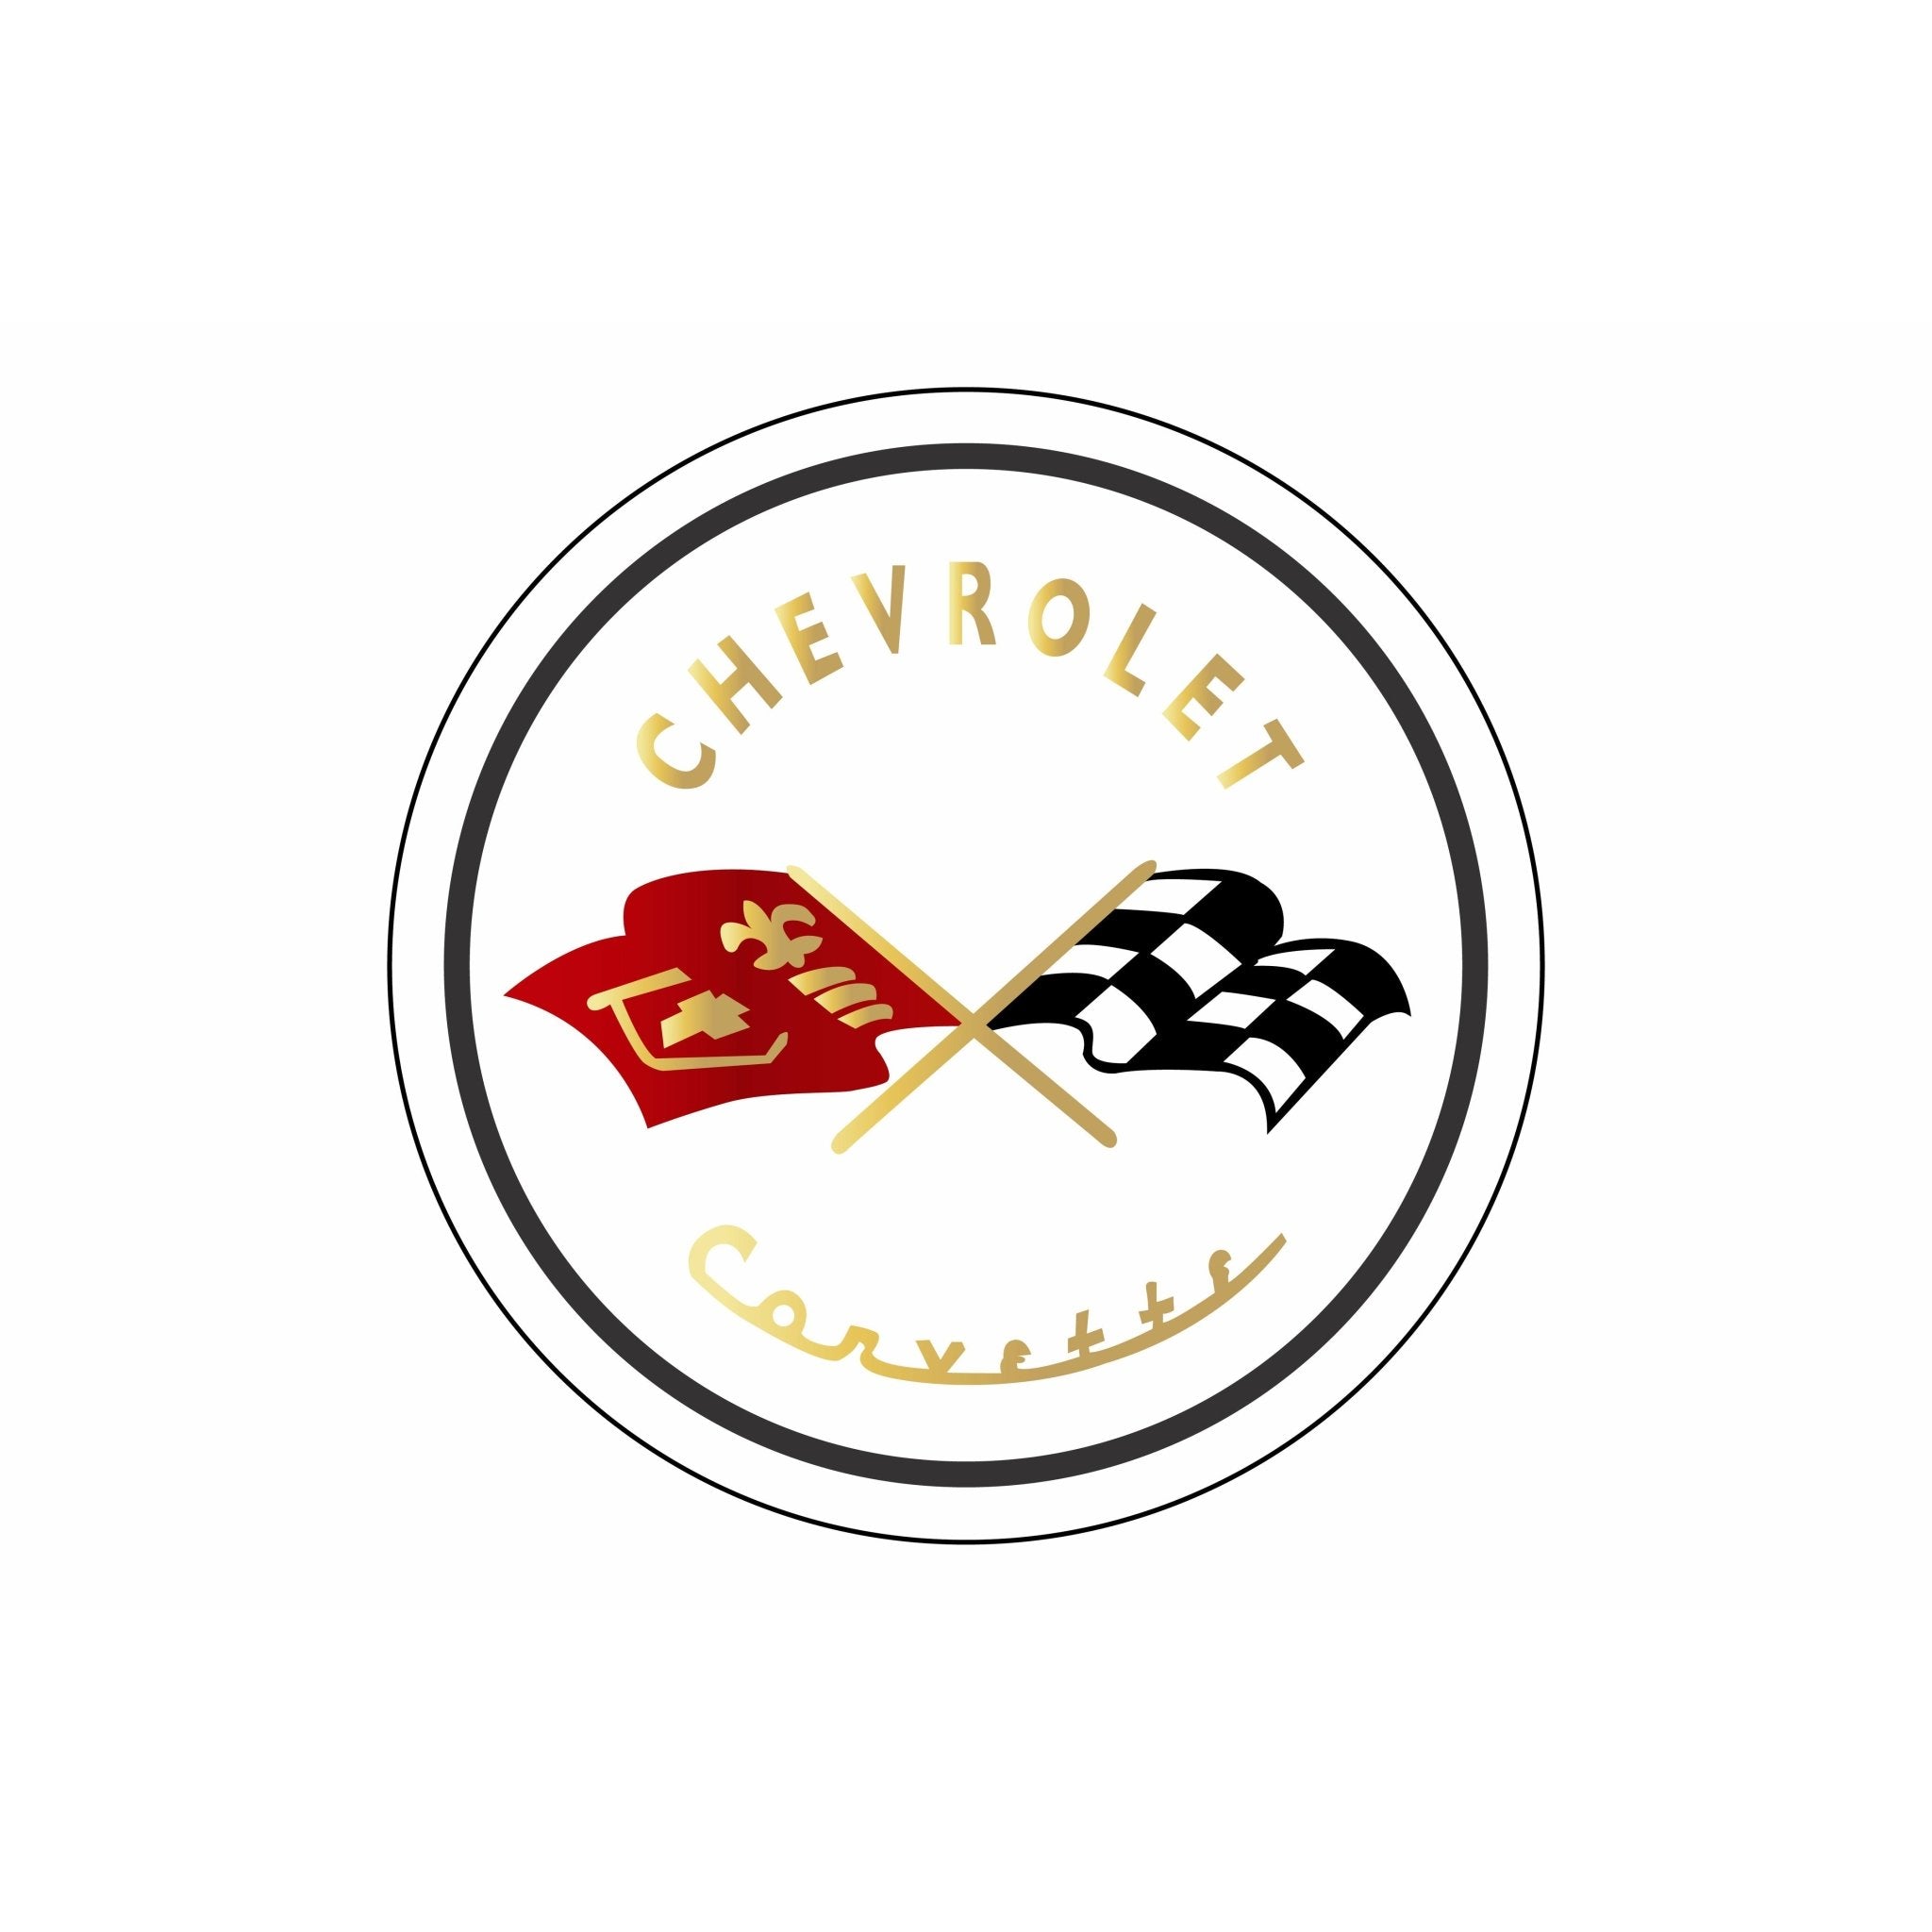 Corvette C1 Emblem, Vector, SVG, Cut File, Print, Illustration, Digital, Scrapbooking, Cameo, Cricut - Vette1 - C1 Downloads